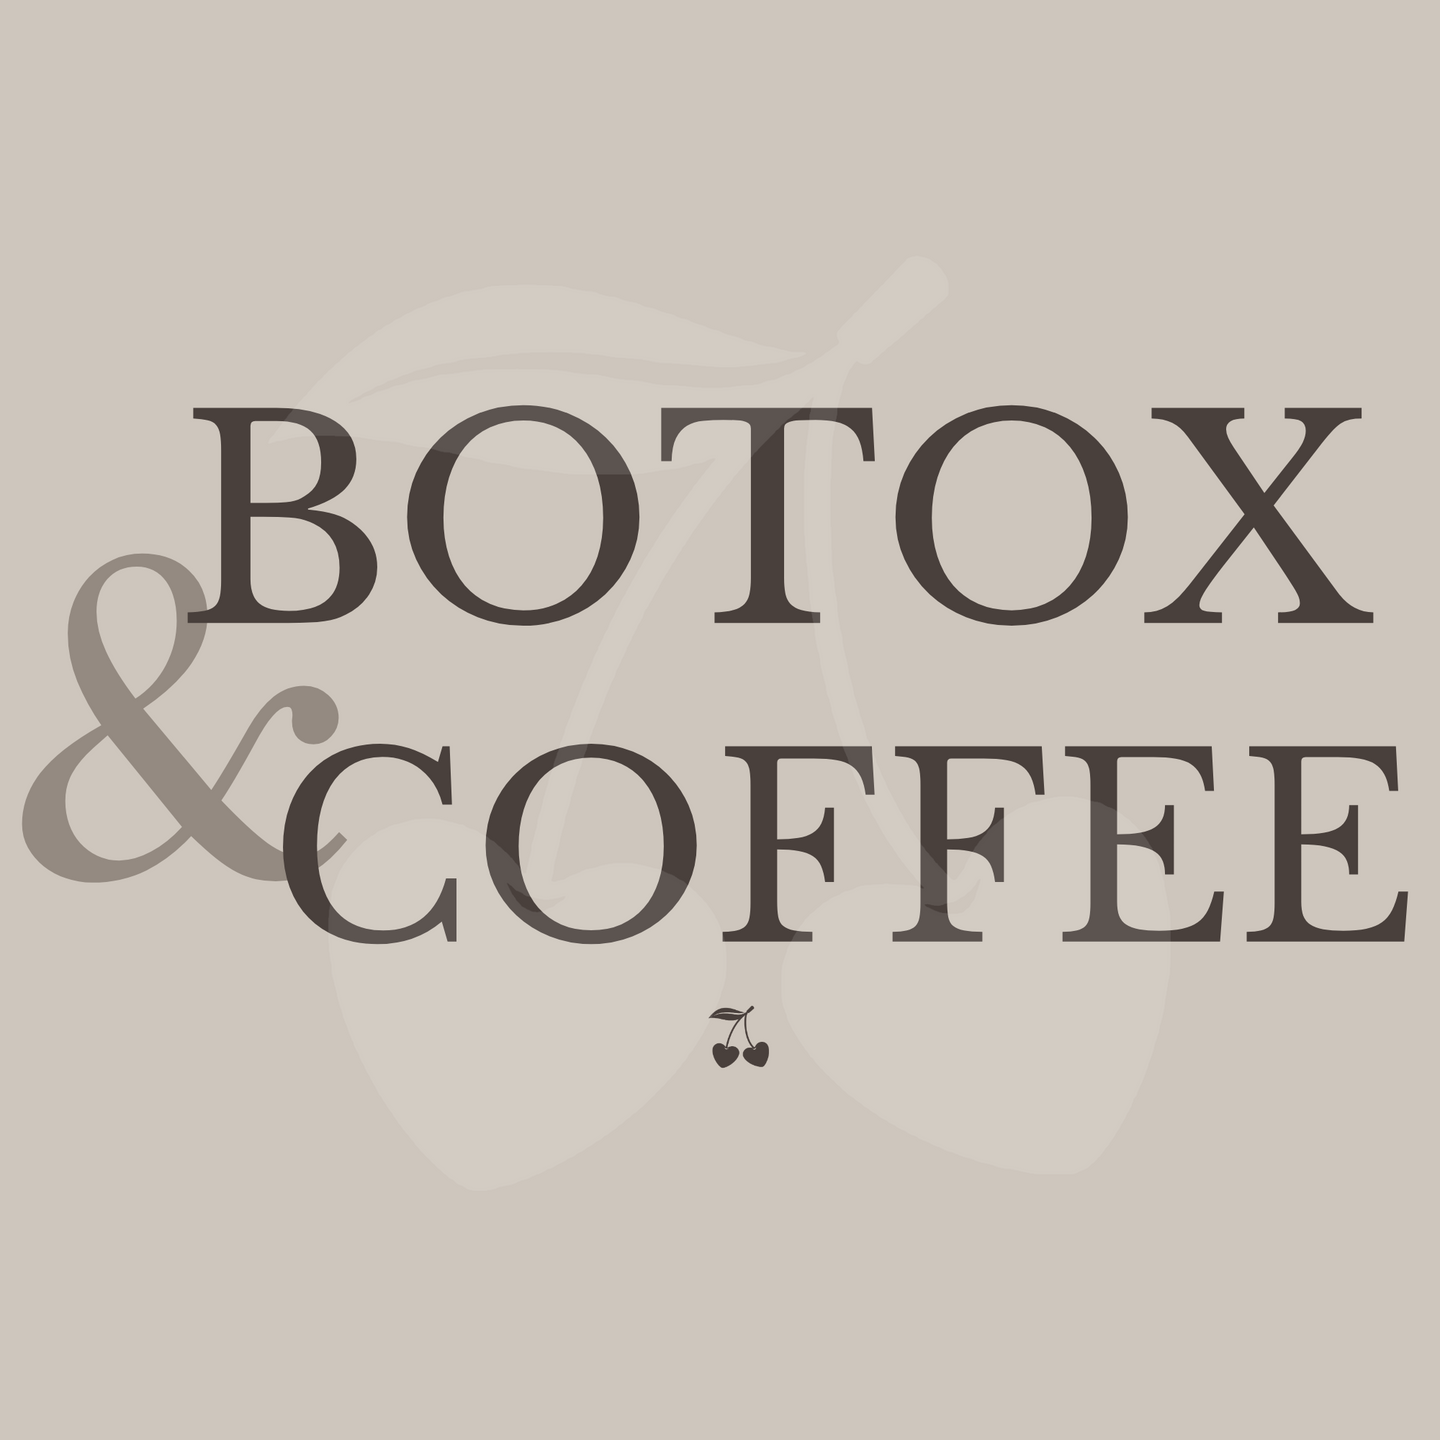 Botox & Coffee Graphic Sweatshirt